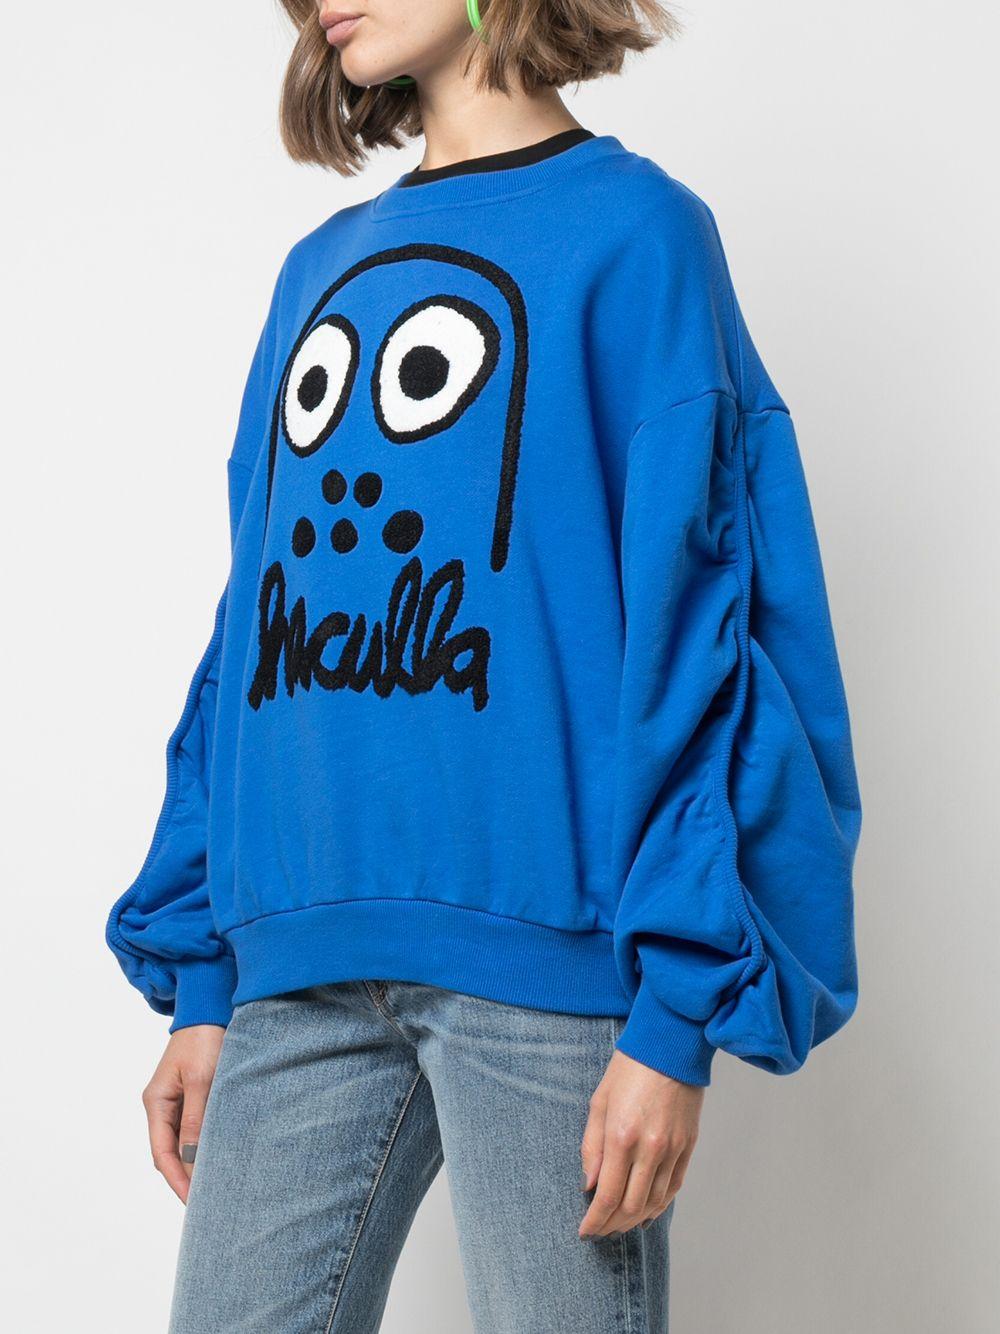 Haculla Cotton Monster Print Sweatshirt in Blue - Lyst